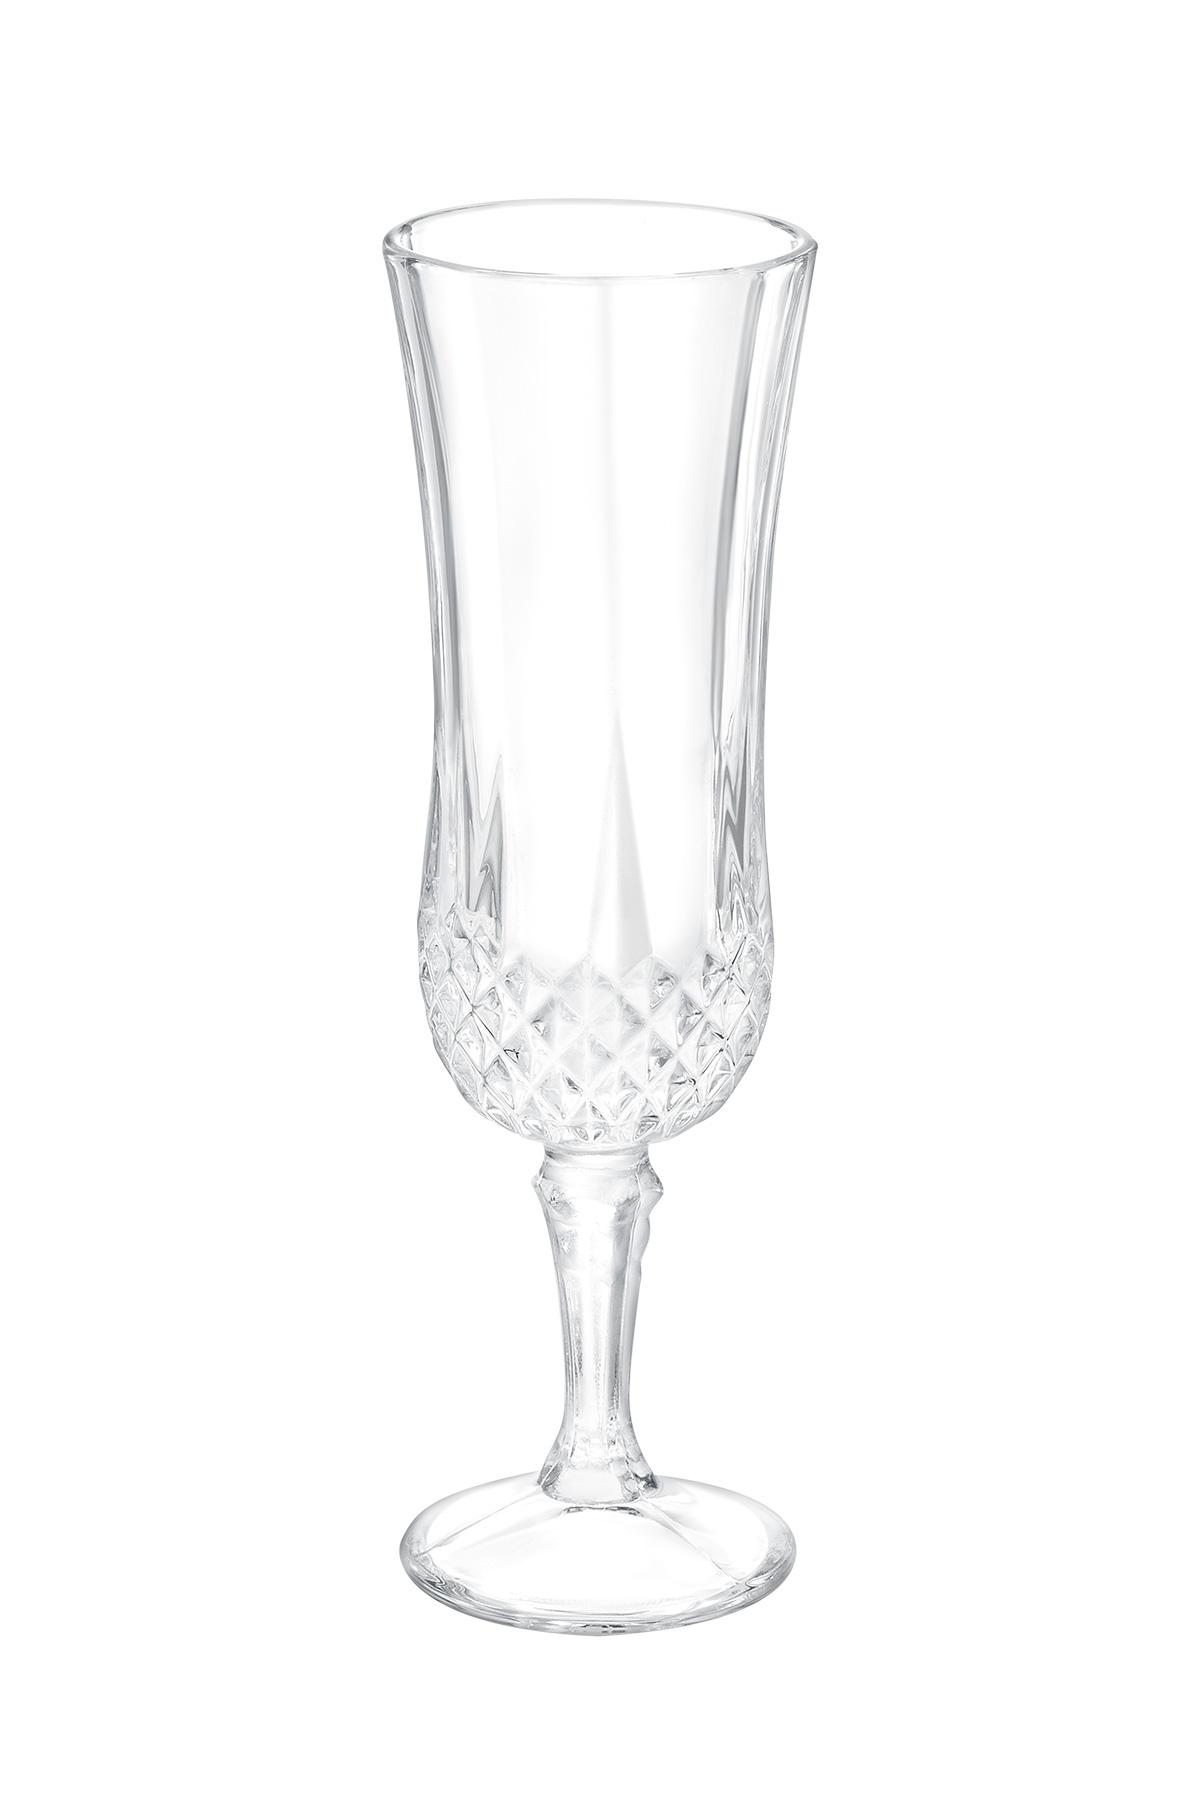 MADAME COCO Audrey Set čaša za šampanjac, 4kom, 170ml, 6x2cm